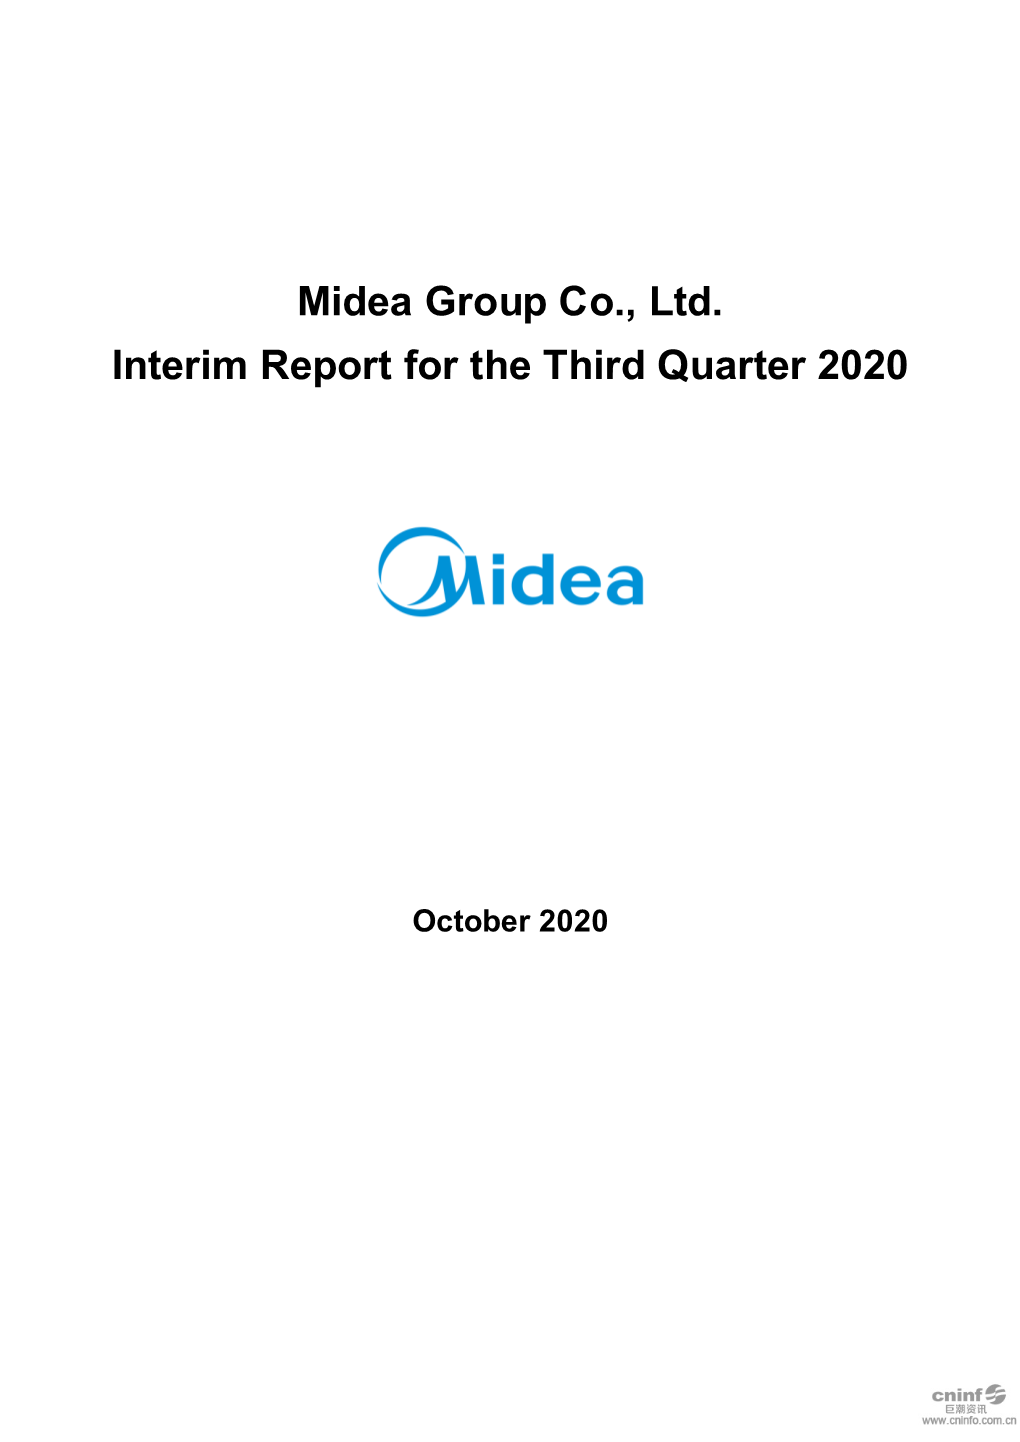 Midea Group Co., Ltd. Interim Report for the Third Quarter 2020